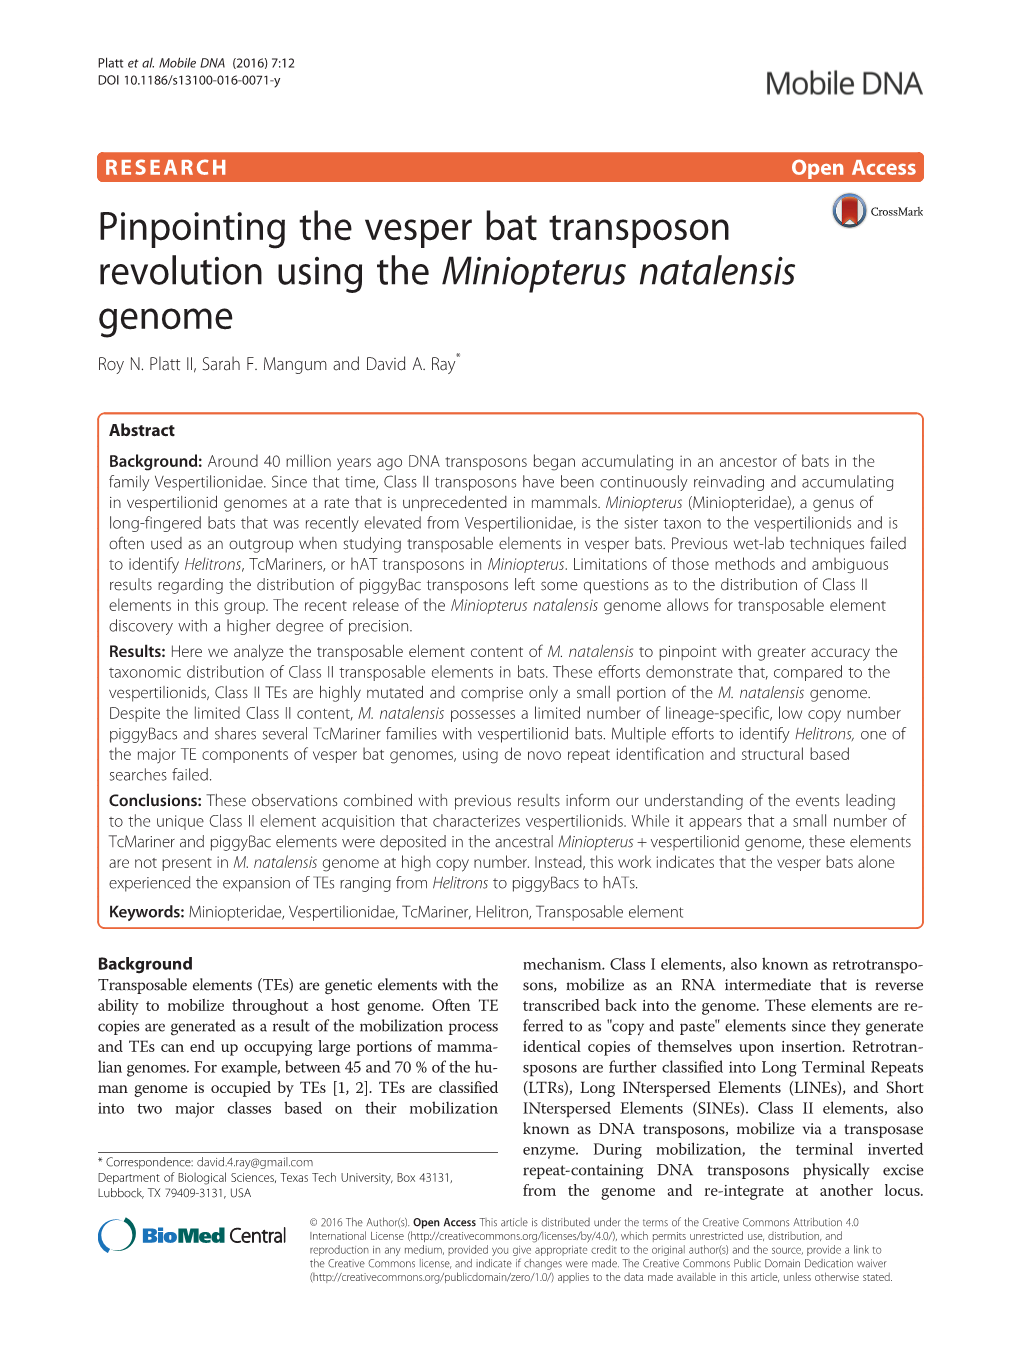 Pinpointing the Vesper Bat Transposon Revolution Using the Miniopterus Natalensis Genome Roy N